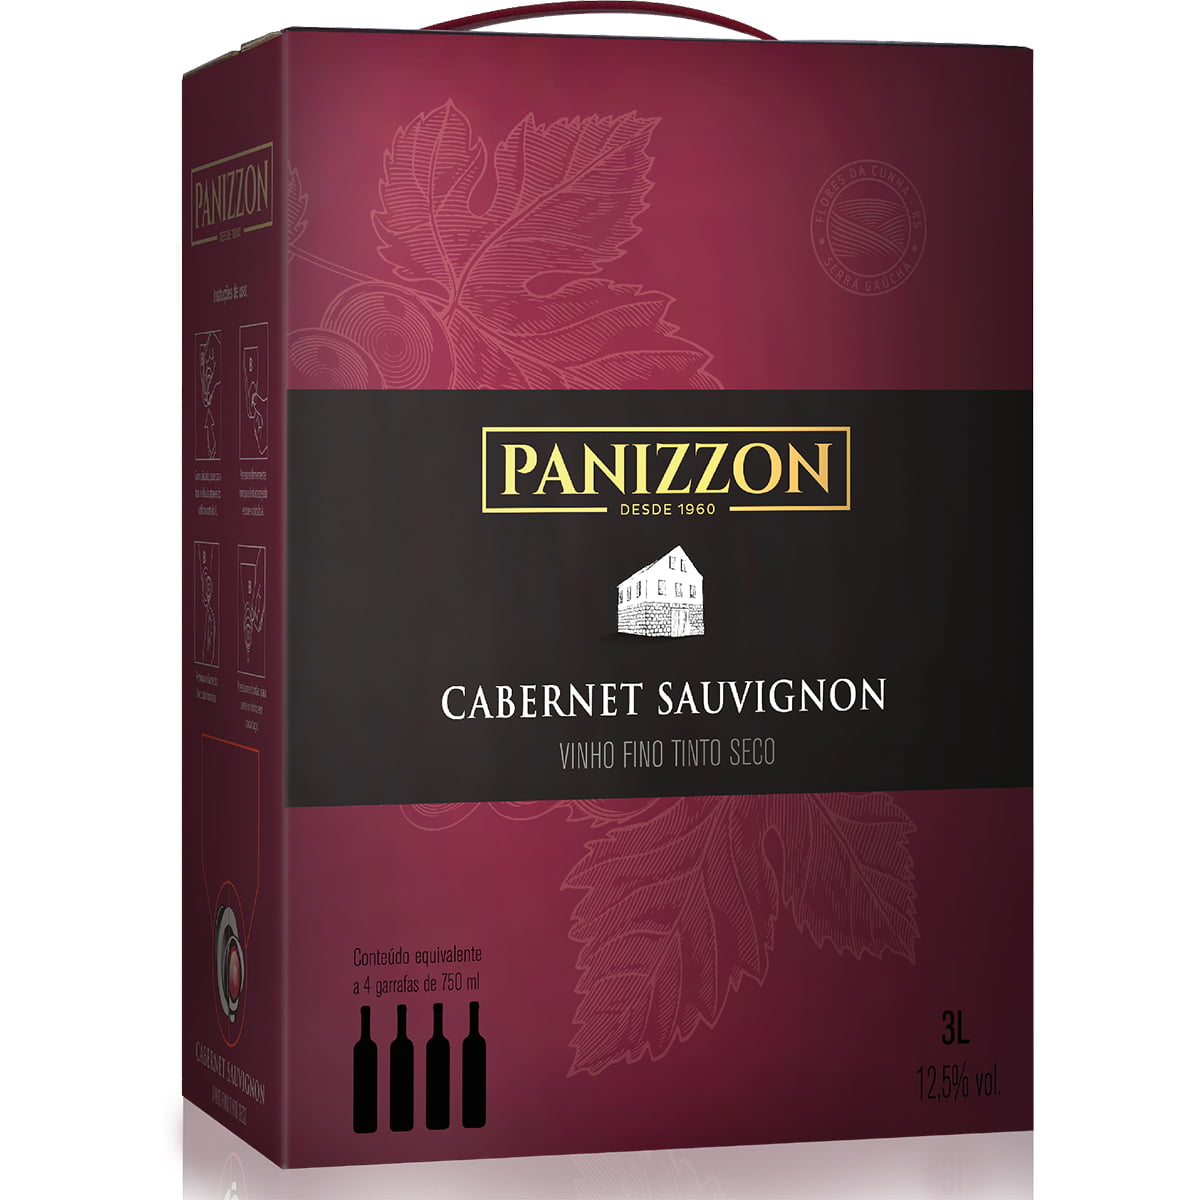 Vinho Panizzon Cabernet Sauvignon Tinto Seco Bag in Box 3L